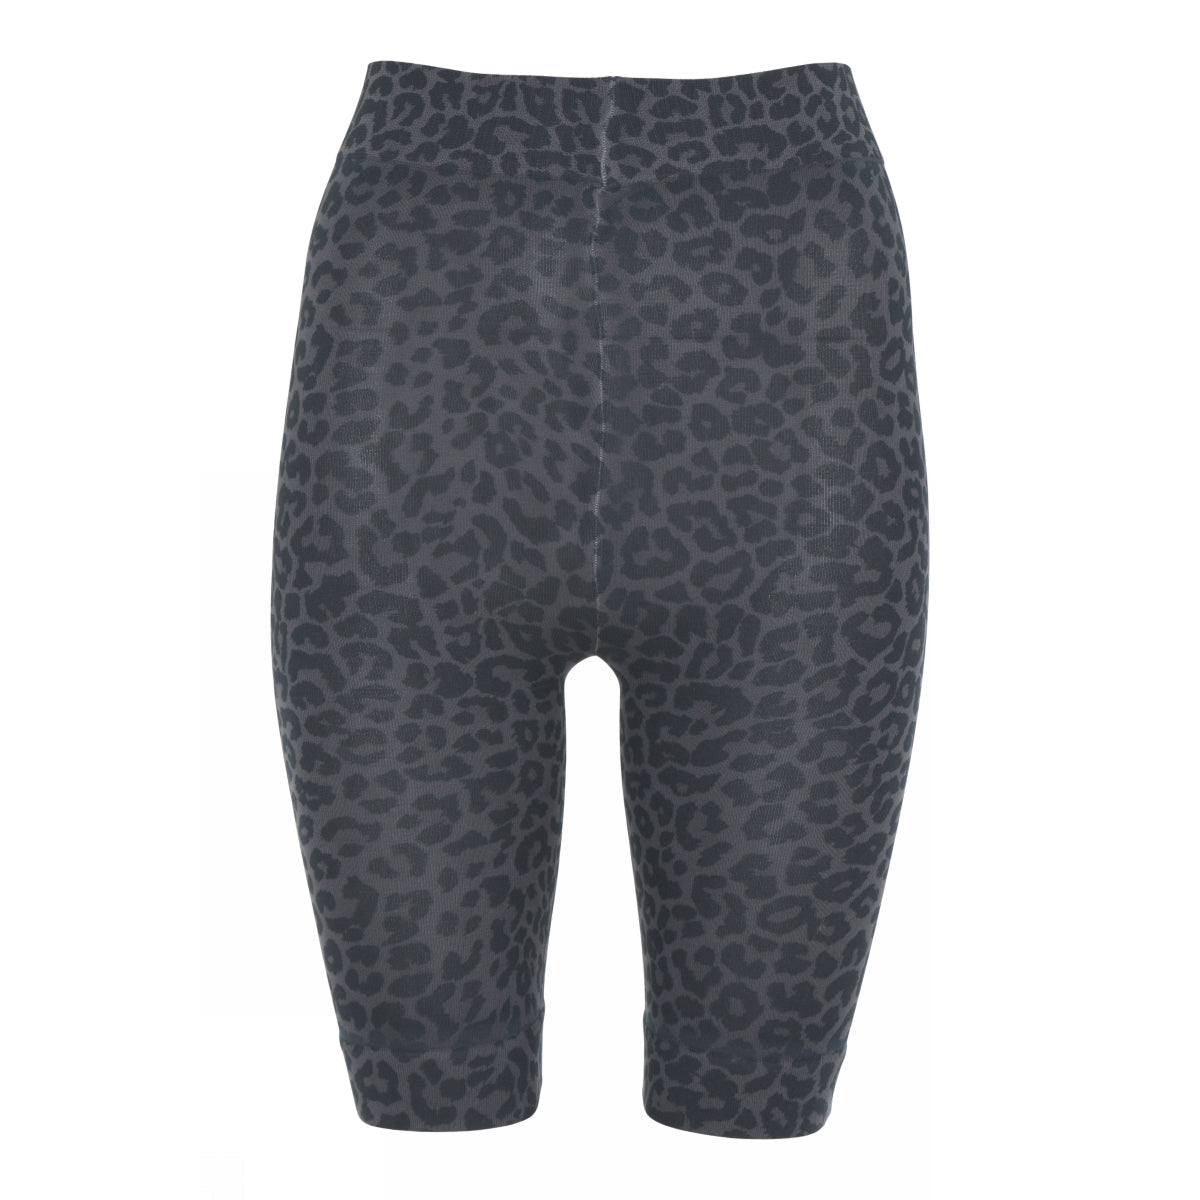 Sneaky Fox, Leopard shorts, 150 denier-Noisy Item